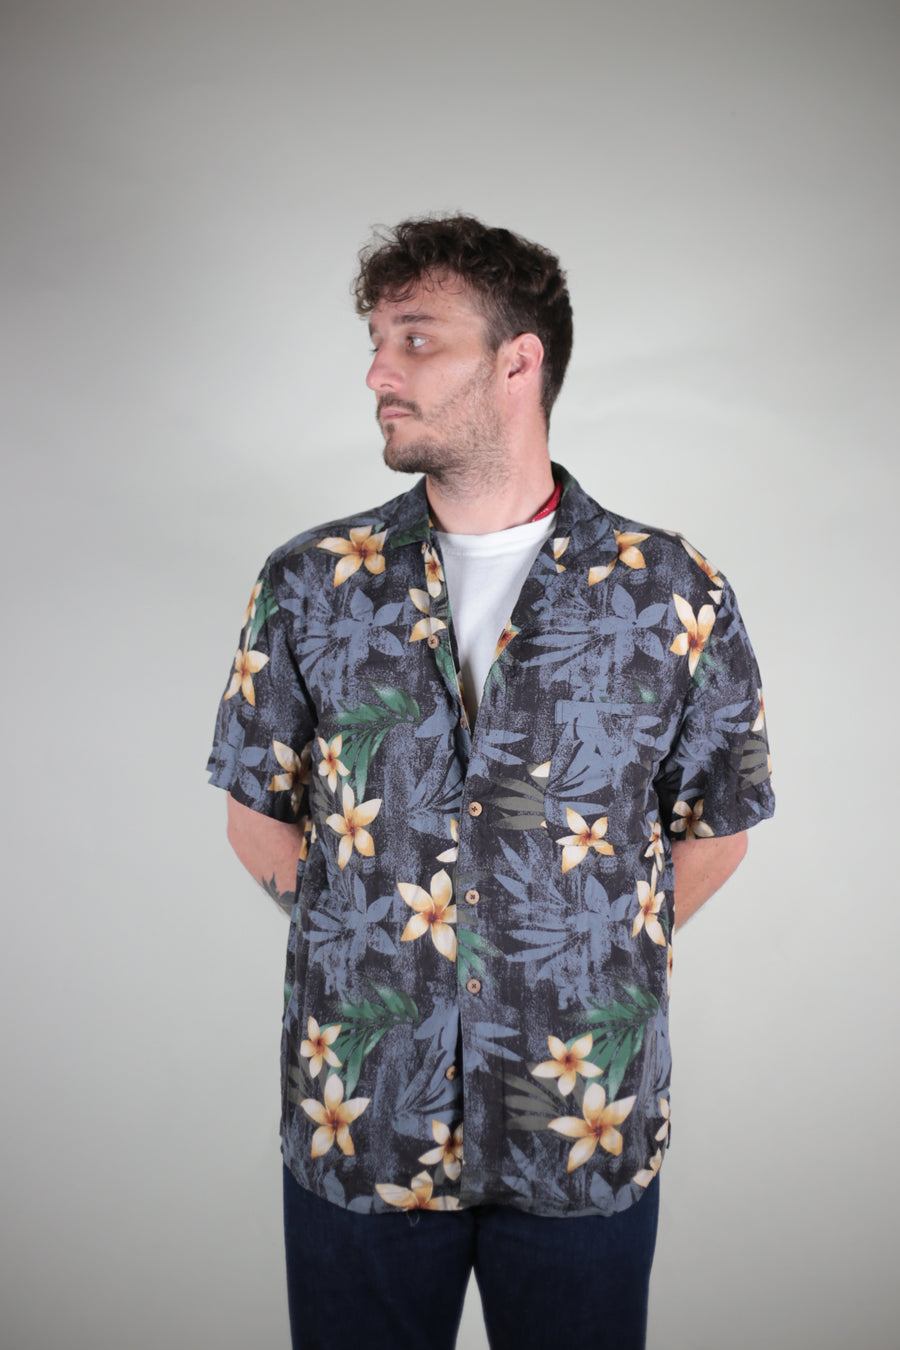 Camicia Hawaiana - L -